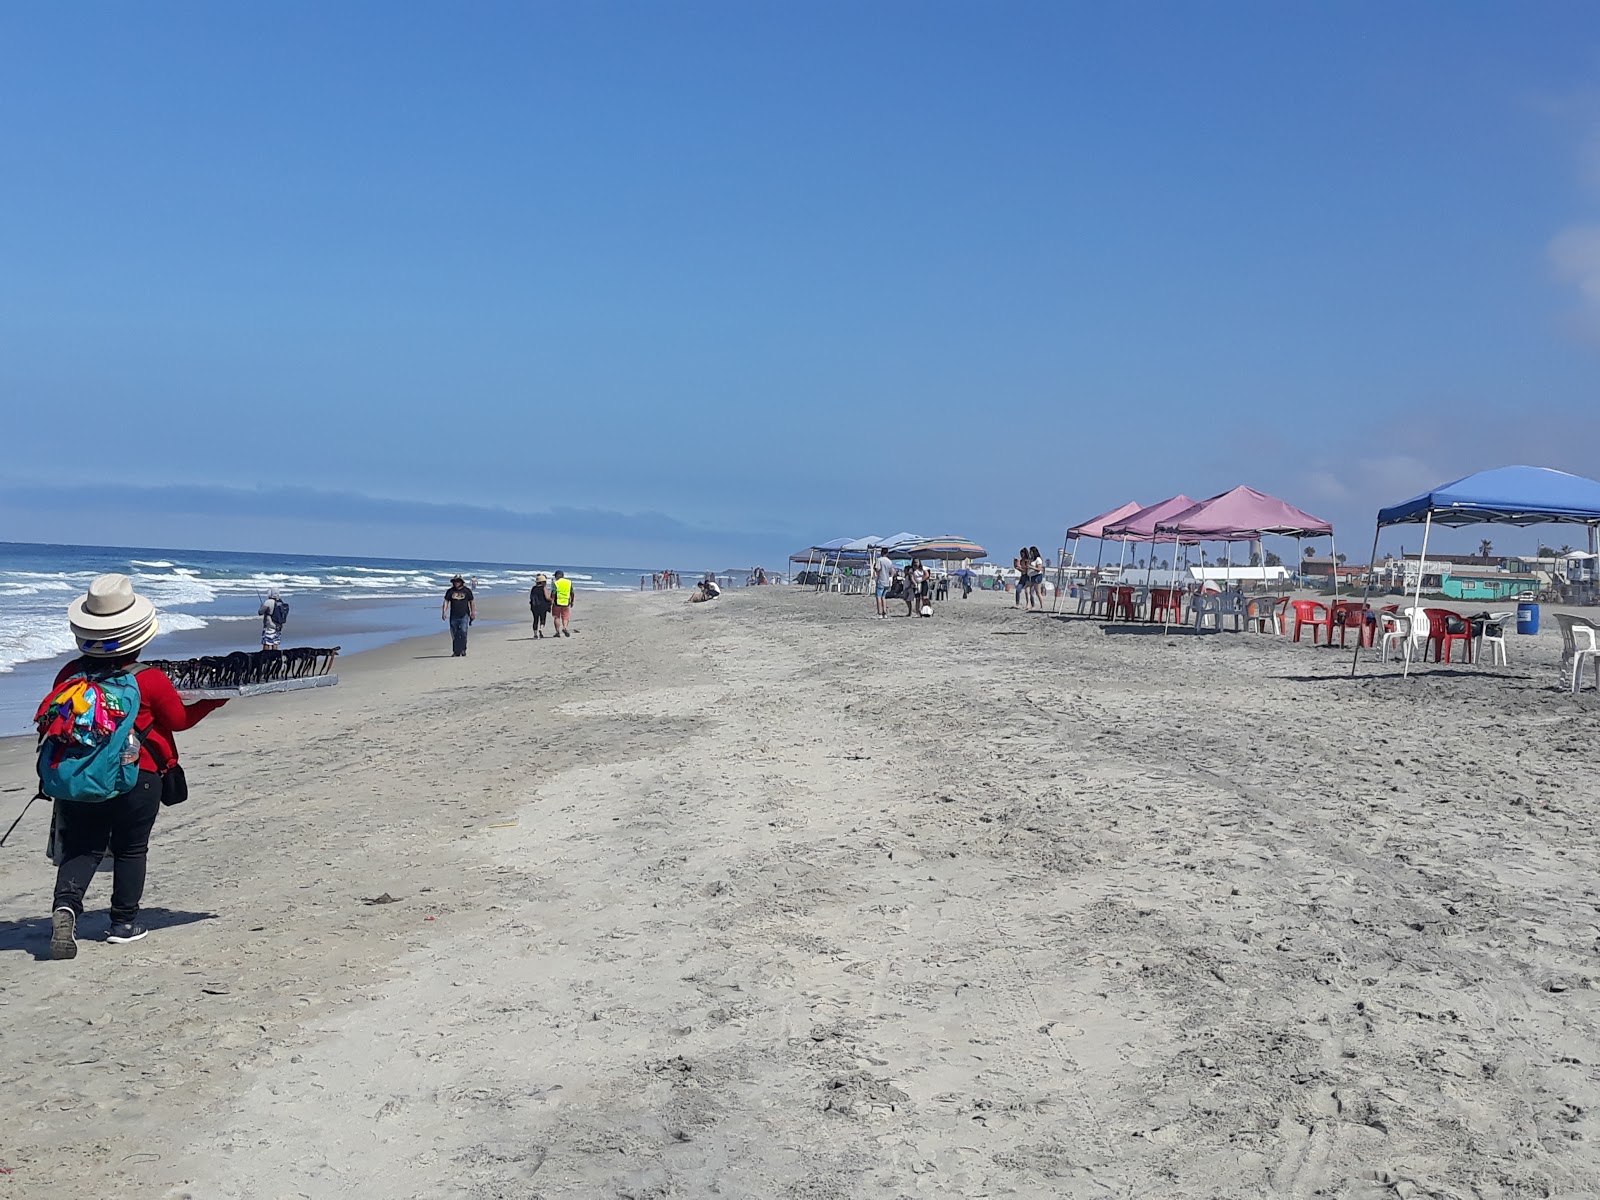 Foto di Playa De Rosarito con una superficie del sabbia scura